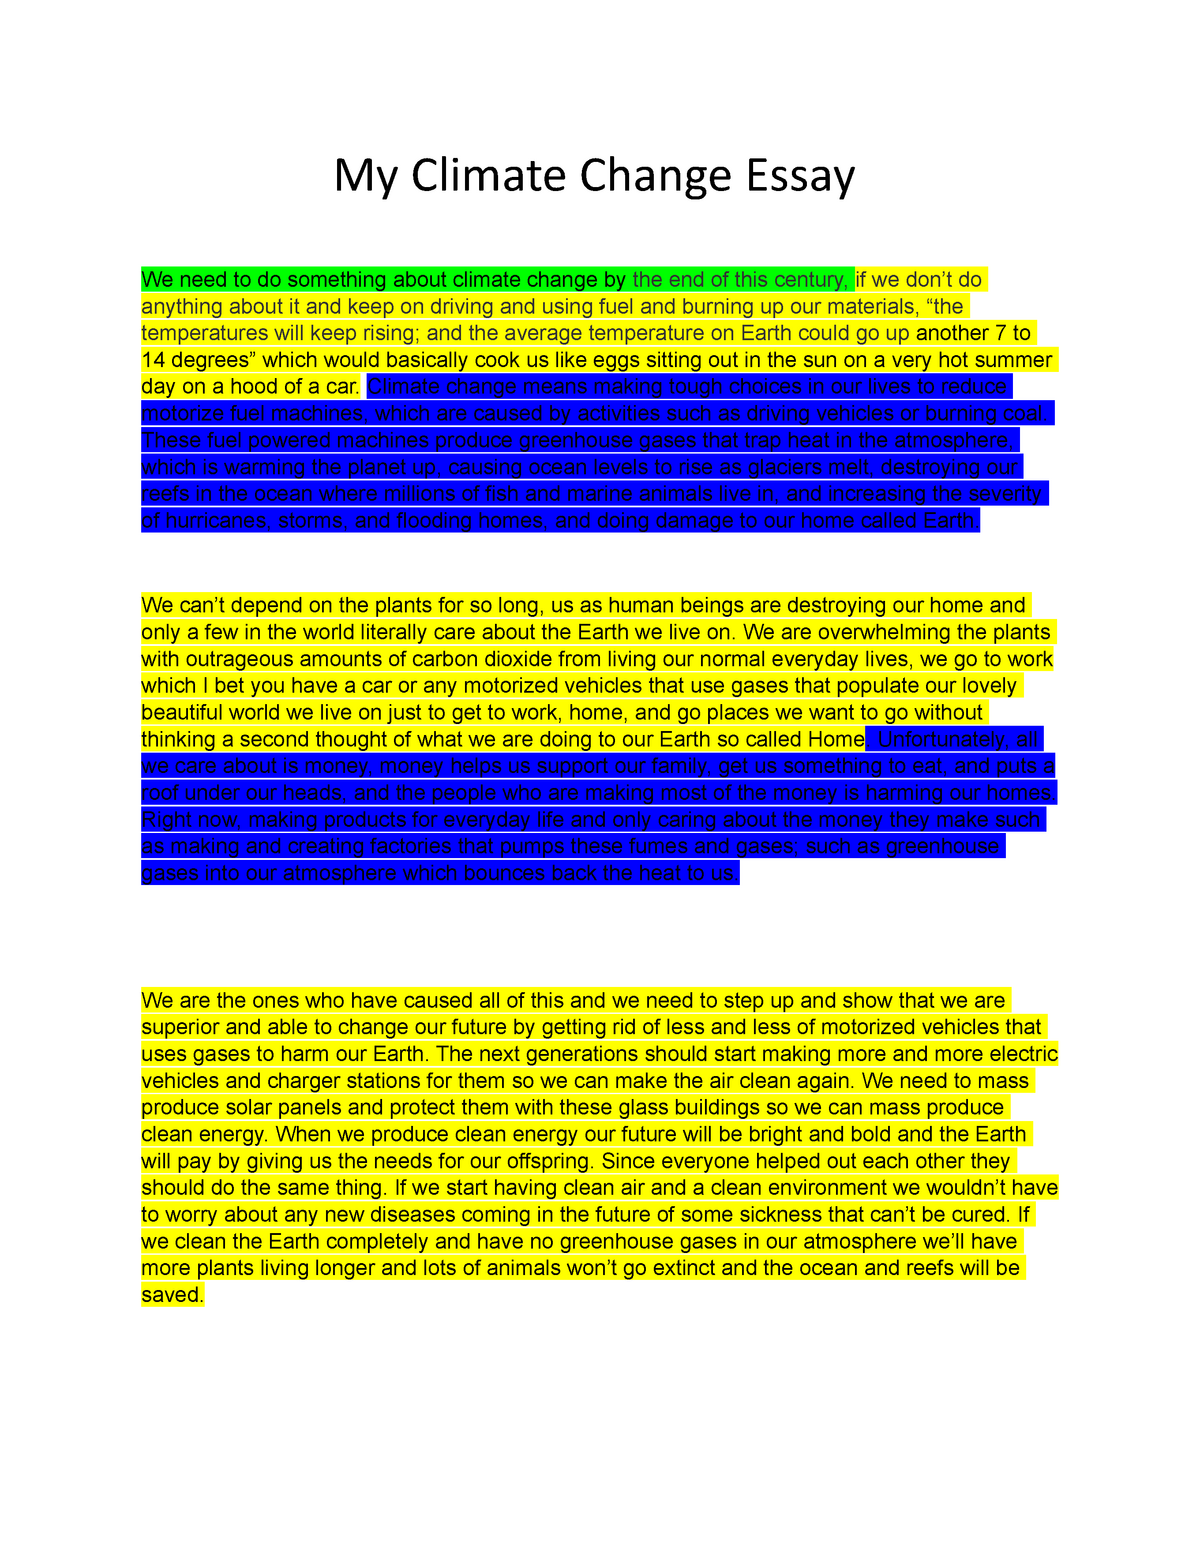 attention grabber for climate change essay